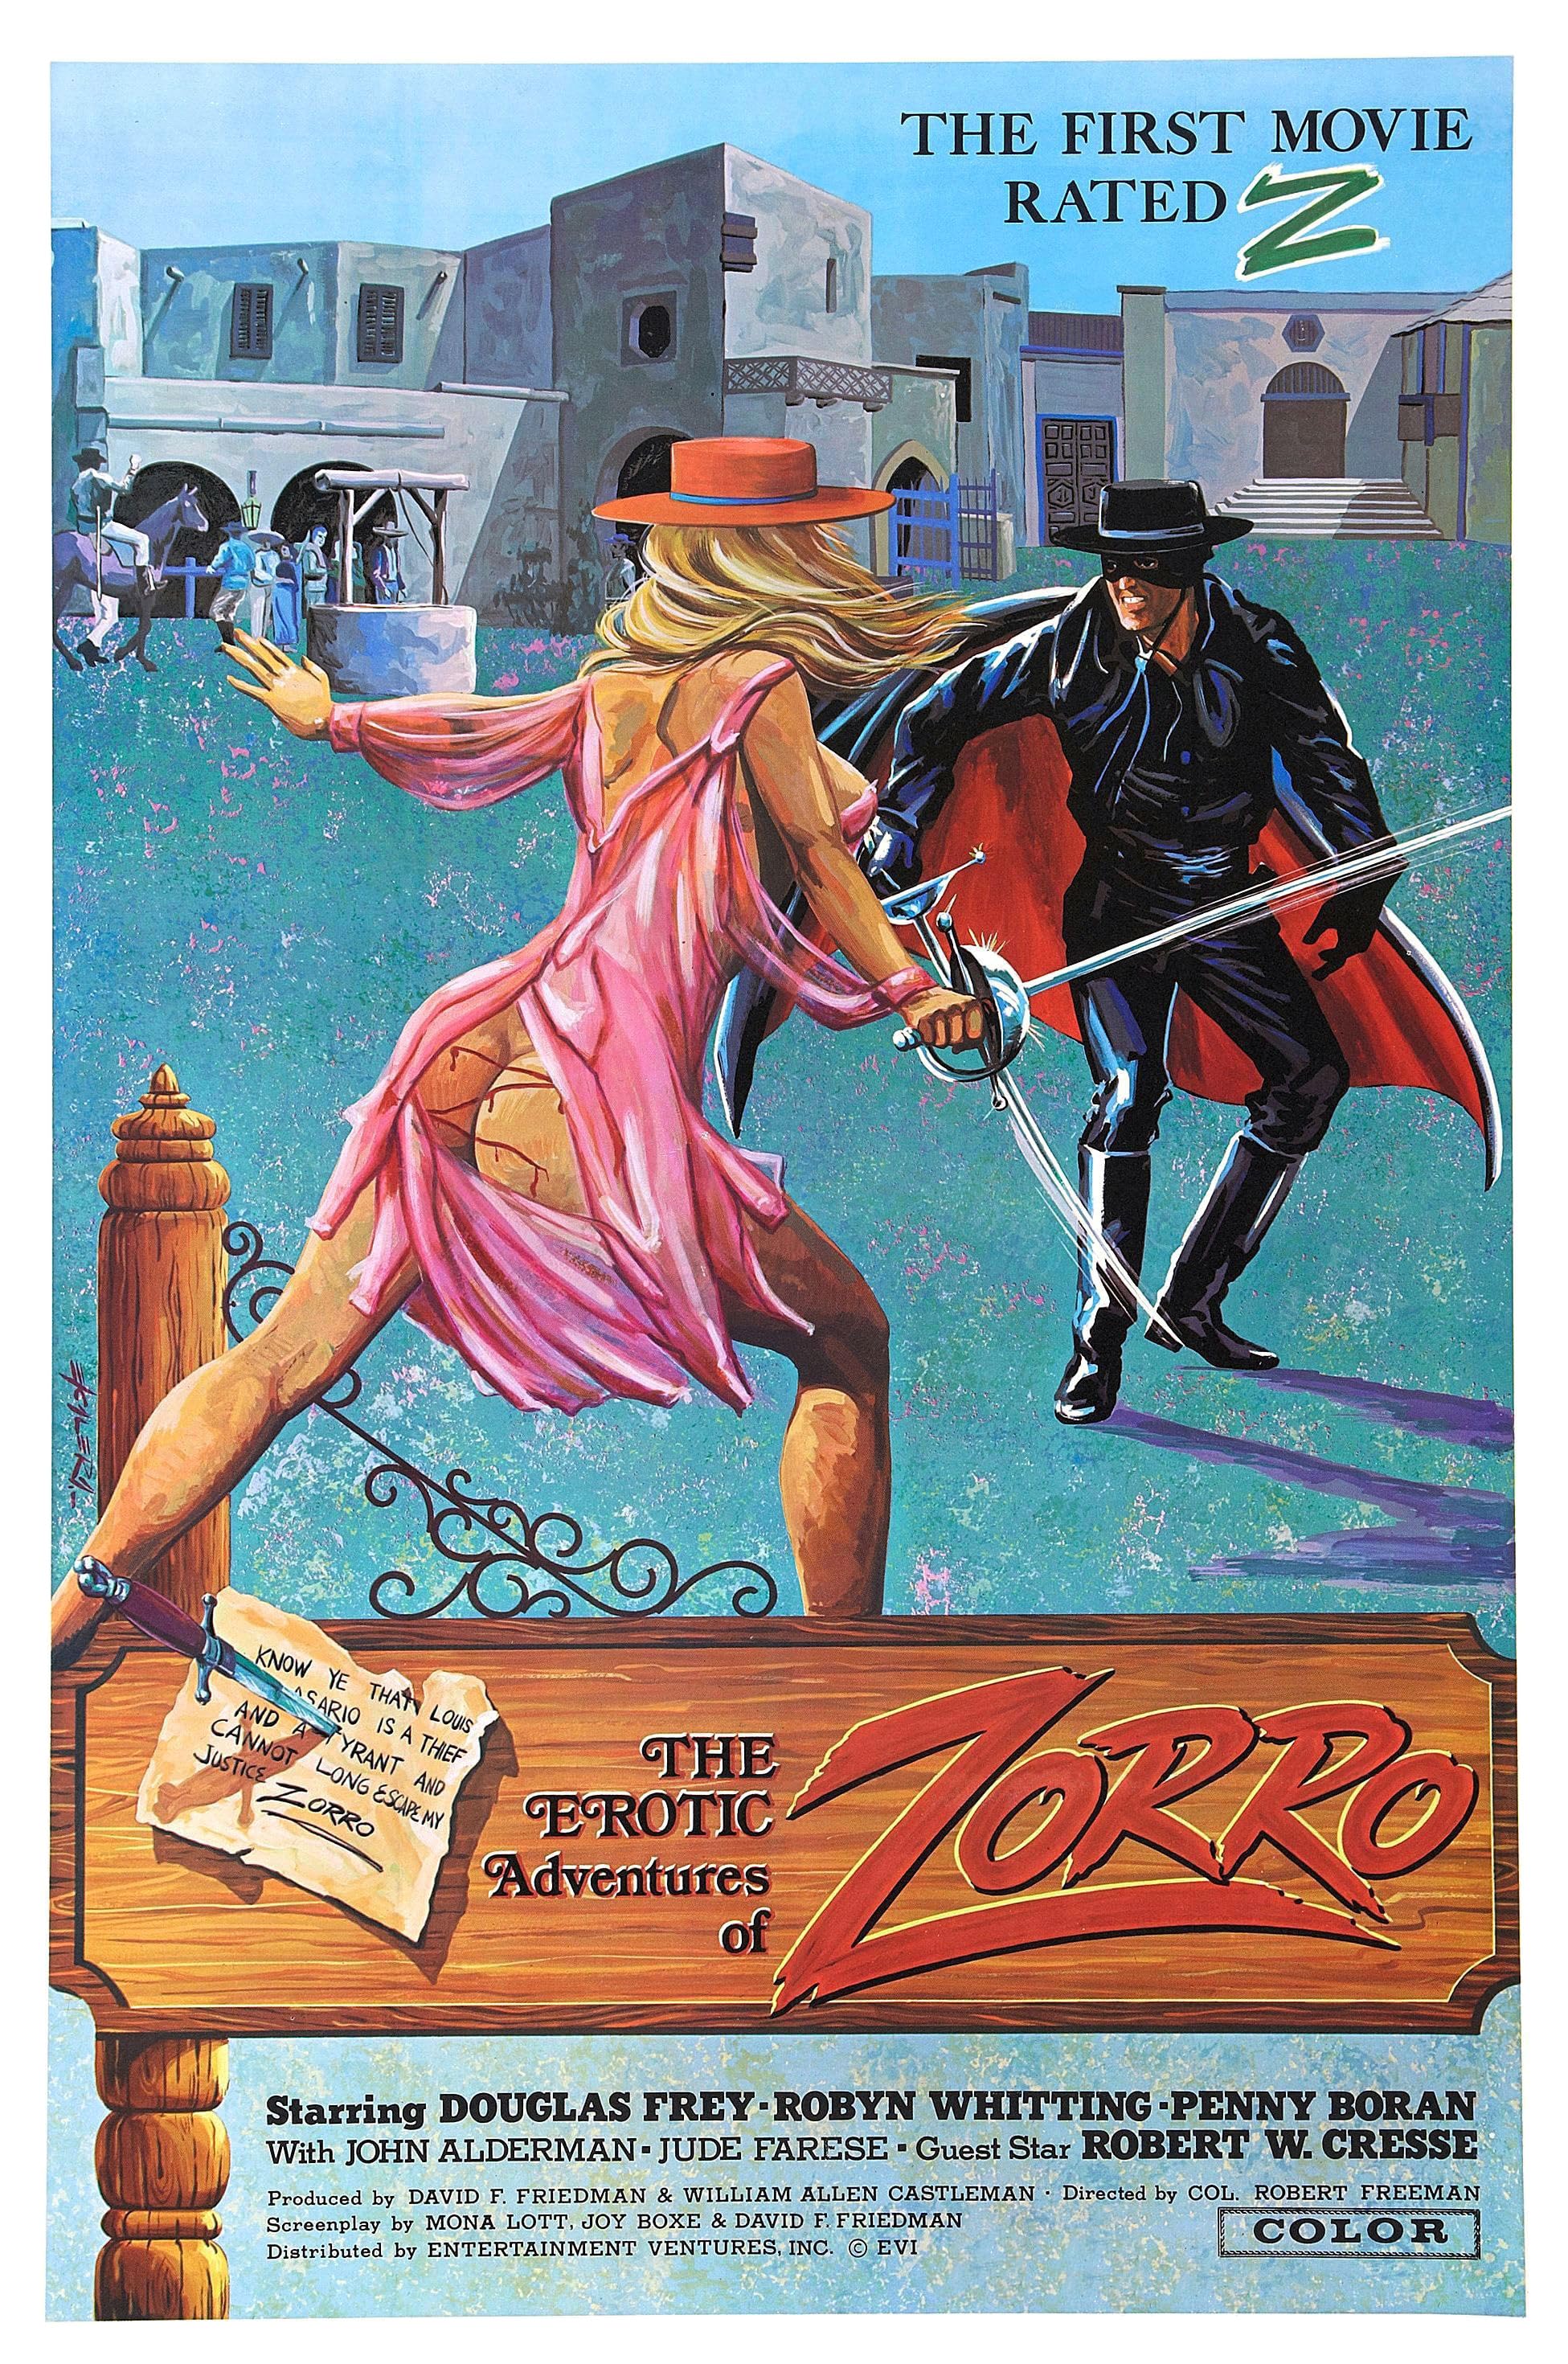 The Erotic Adventures of Zorro movie poster